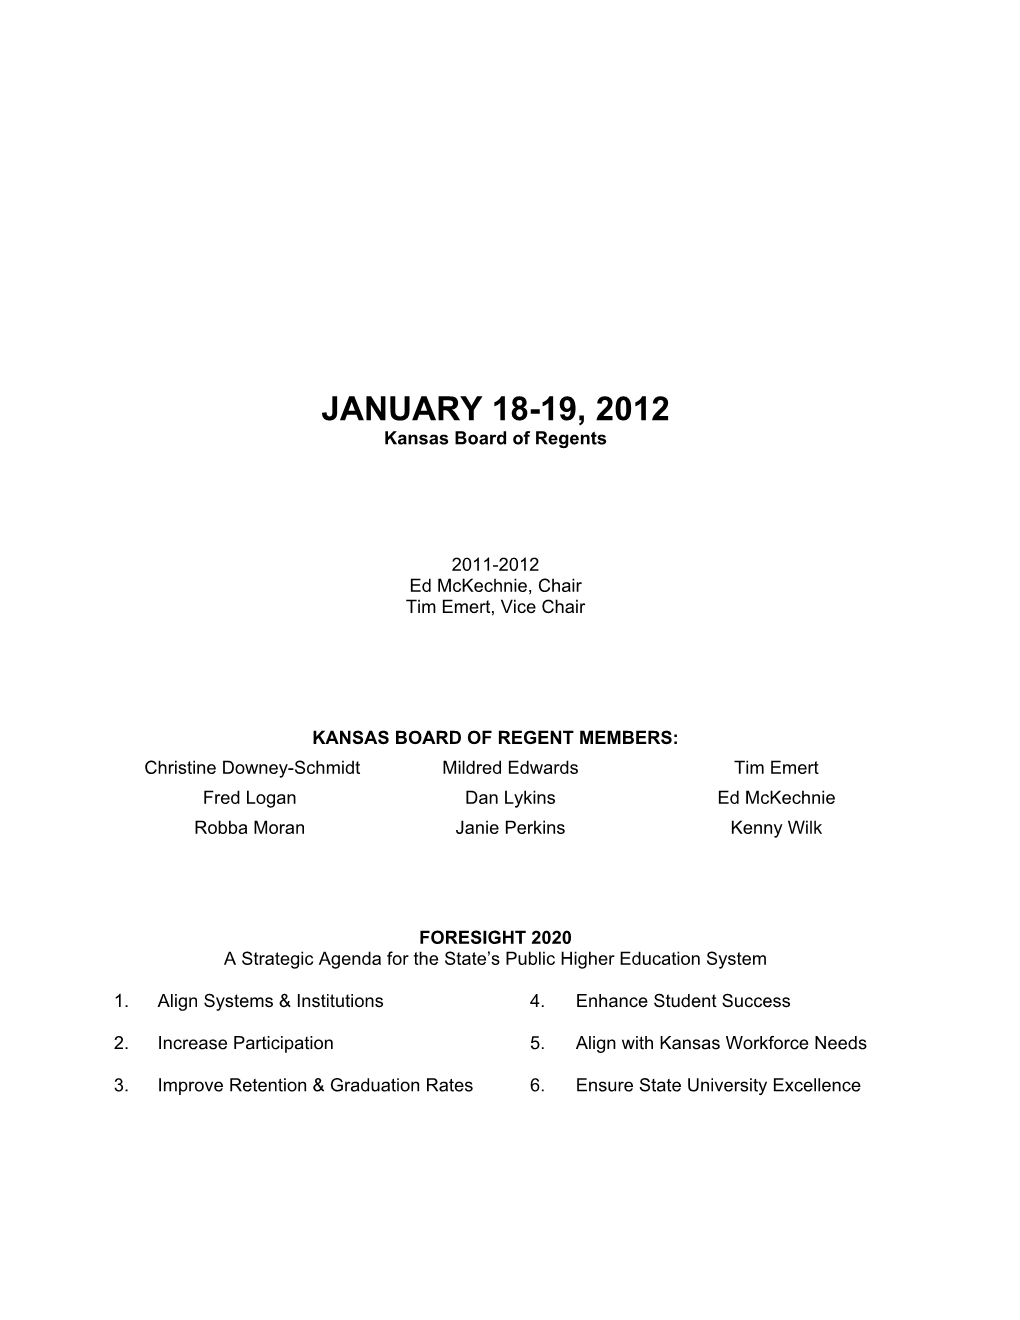 JANUARY 18-19, 2012 Kansas Board of Regents